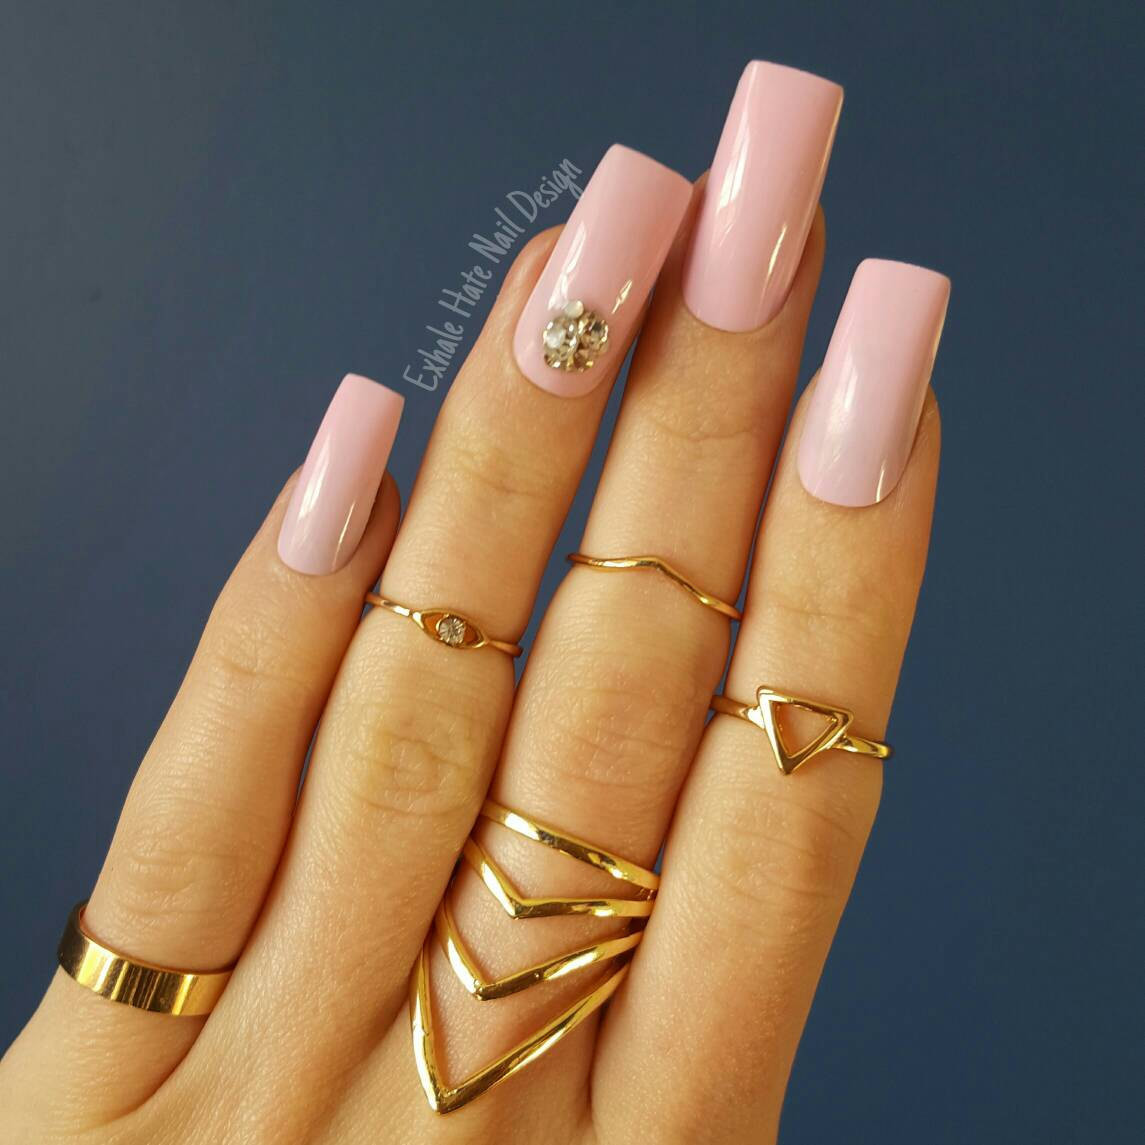 Pink Acrylic Nail Designs
 Top 45 Amazing Light Pink Acrylic Nails